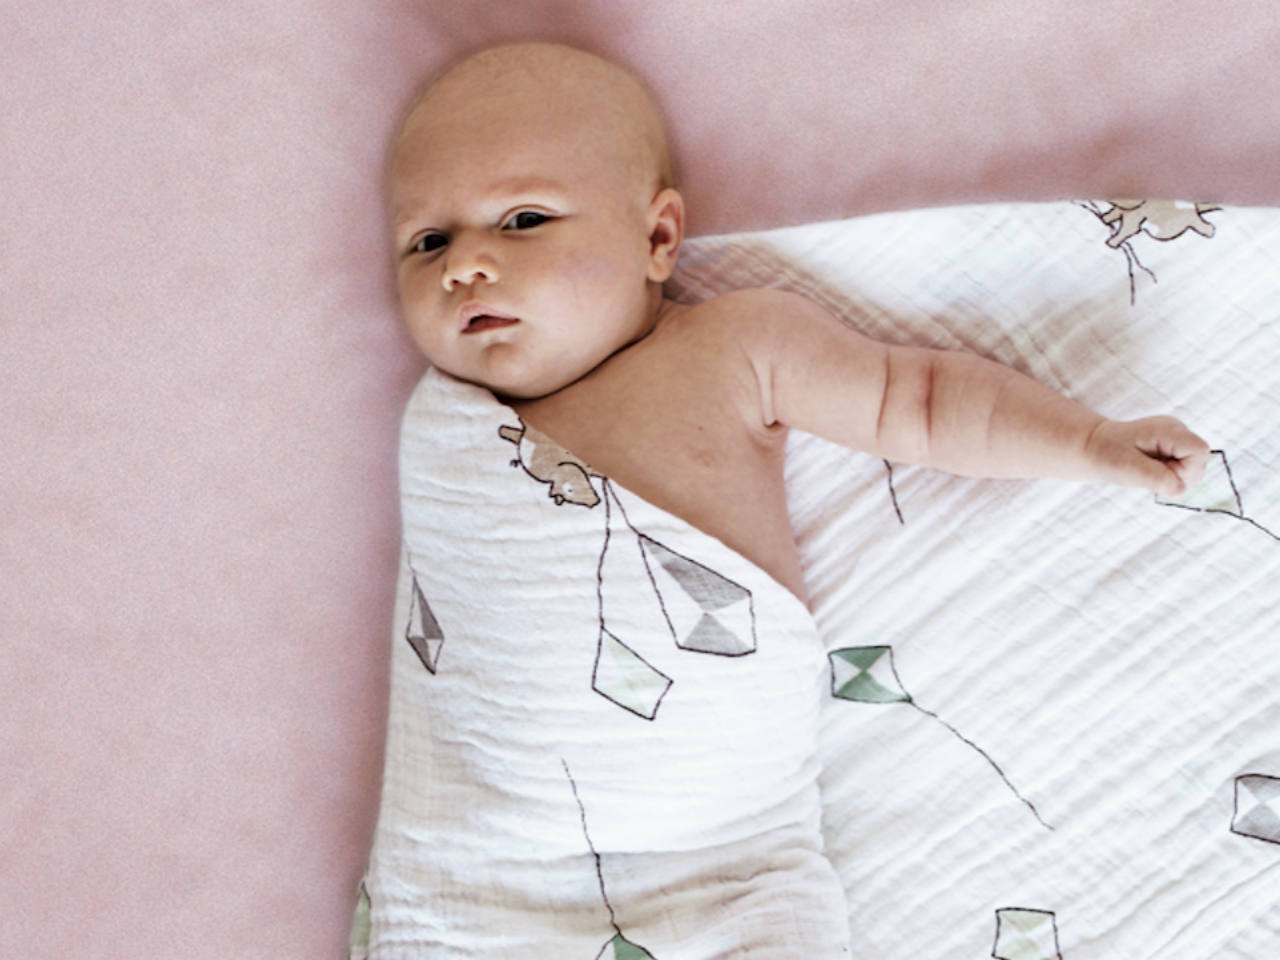 A baby half swaddled in a muslin blanket